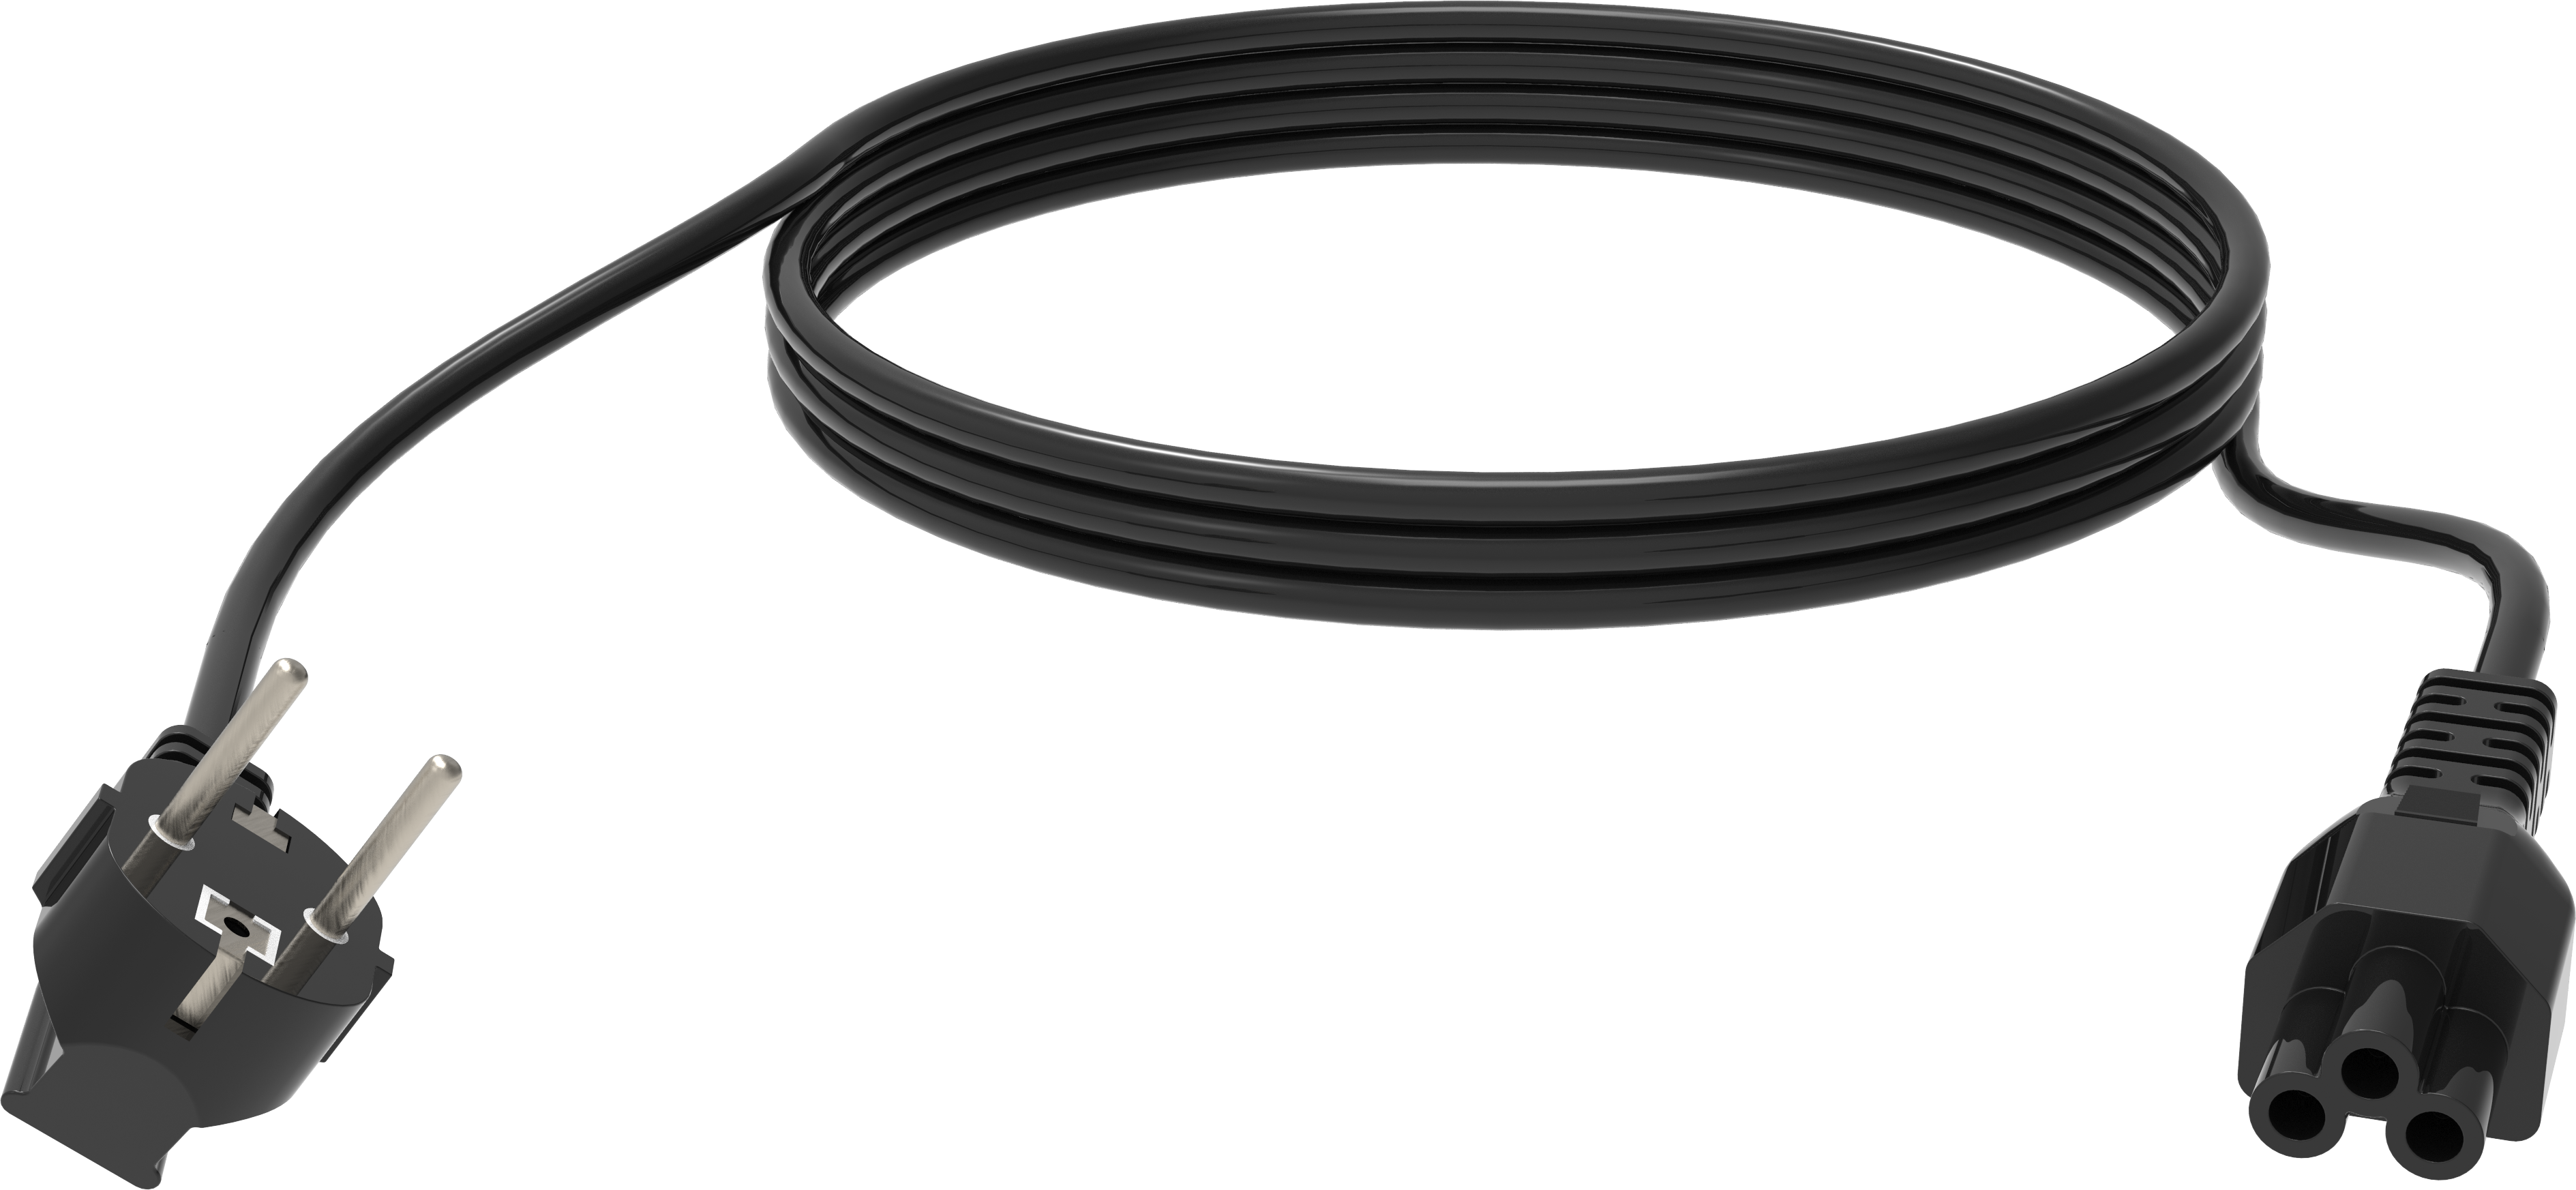 An image showing 3m Black EU Cloverleaf Power Cable